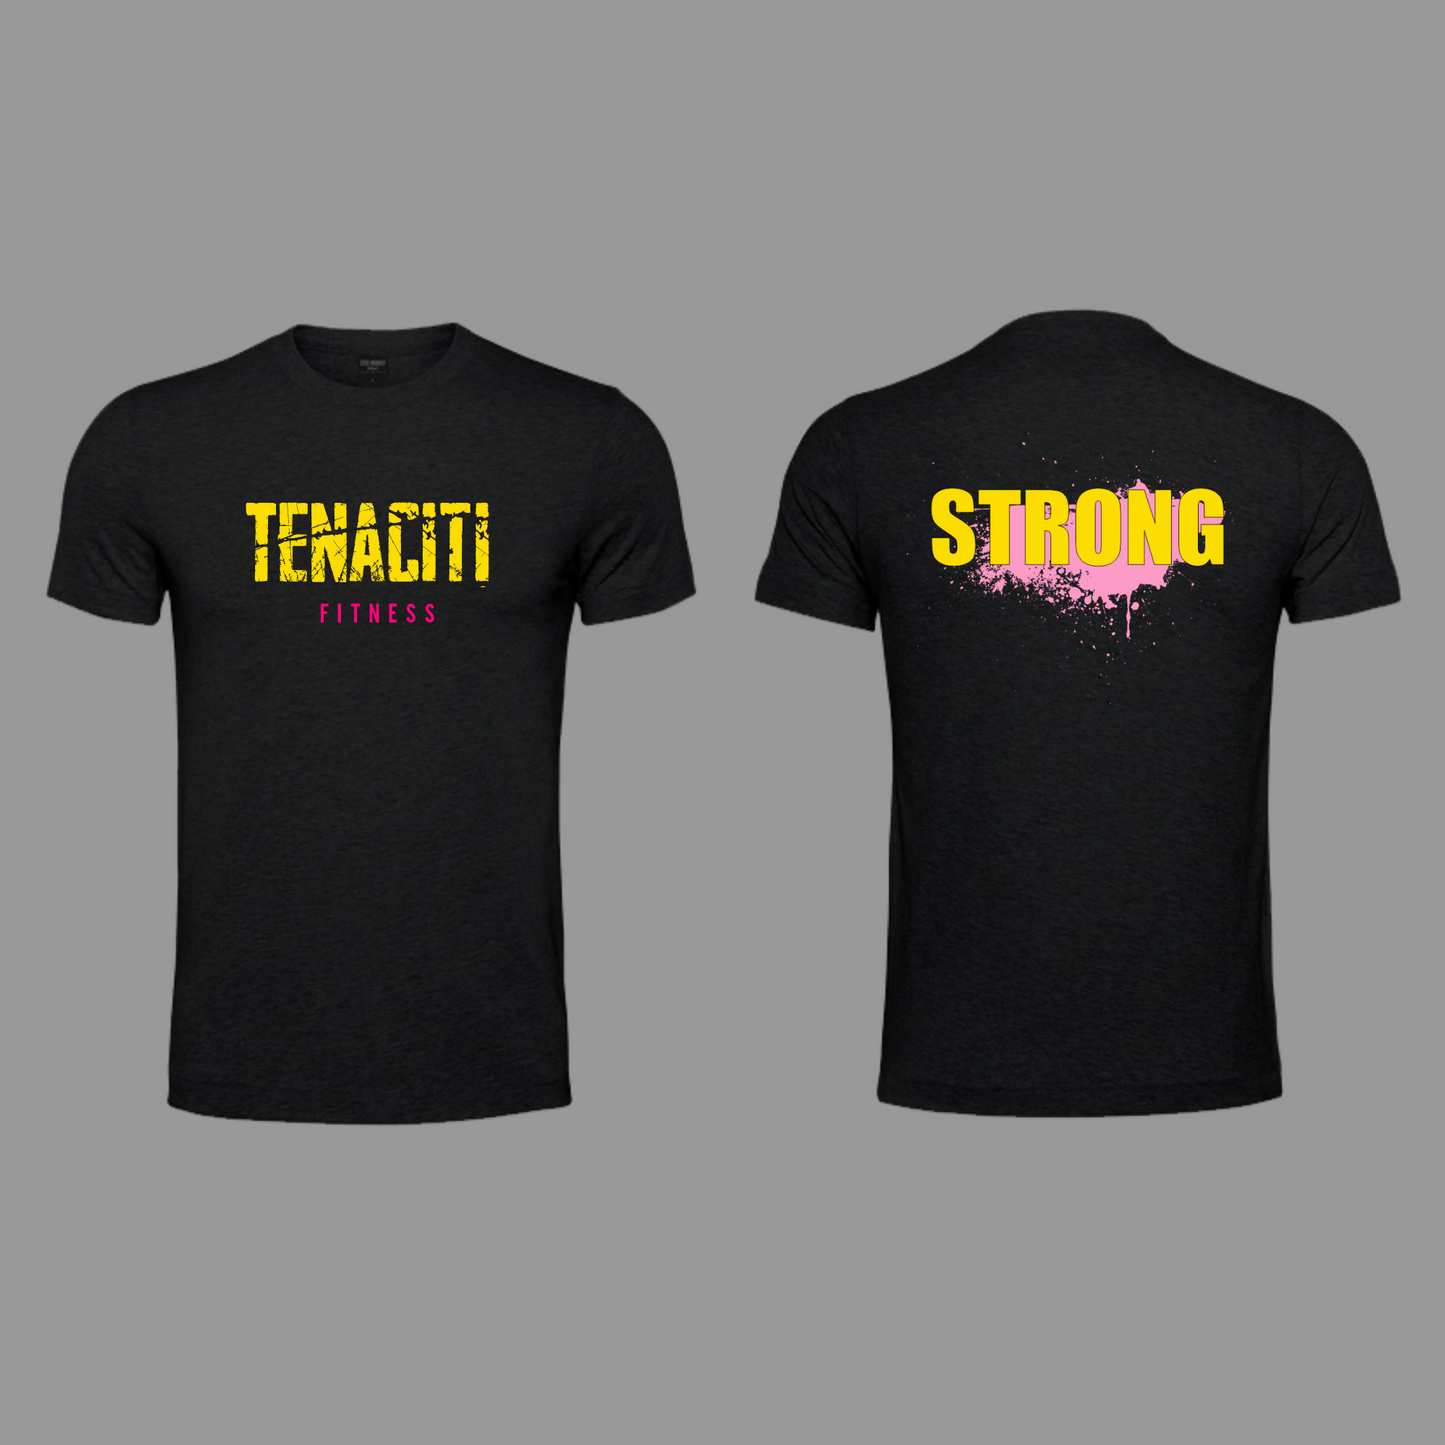 Tenaciti Fitness - Tshirt - Black - Brushed Spandex (YELLOW WITH PINK)